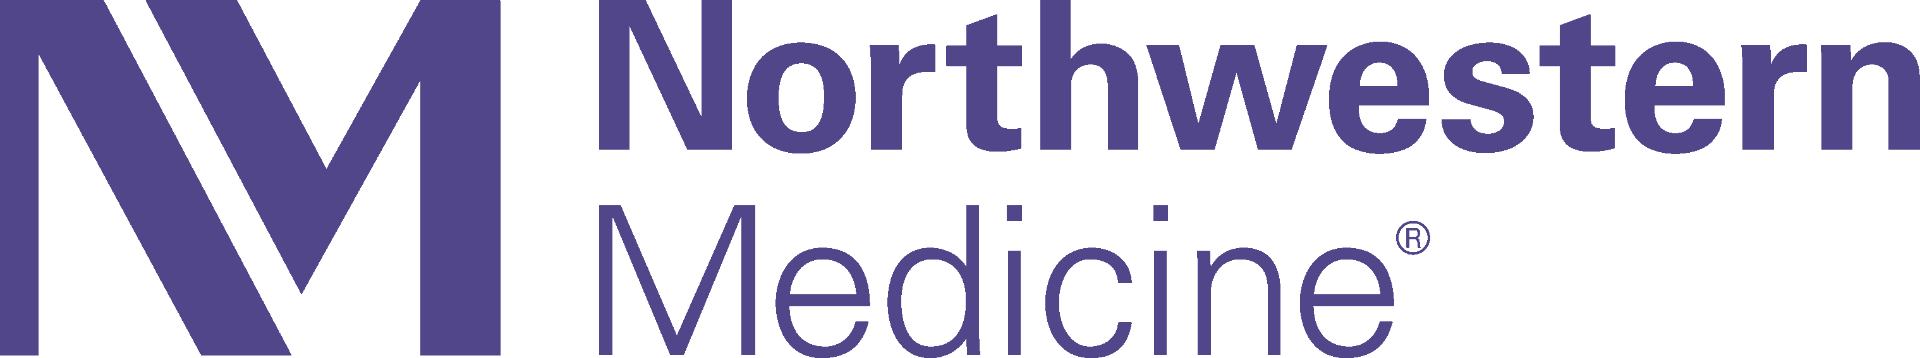 NM Northwestern Medicine